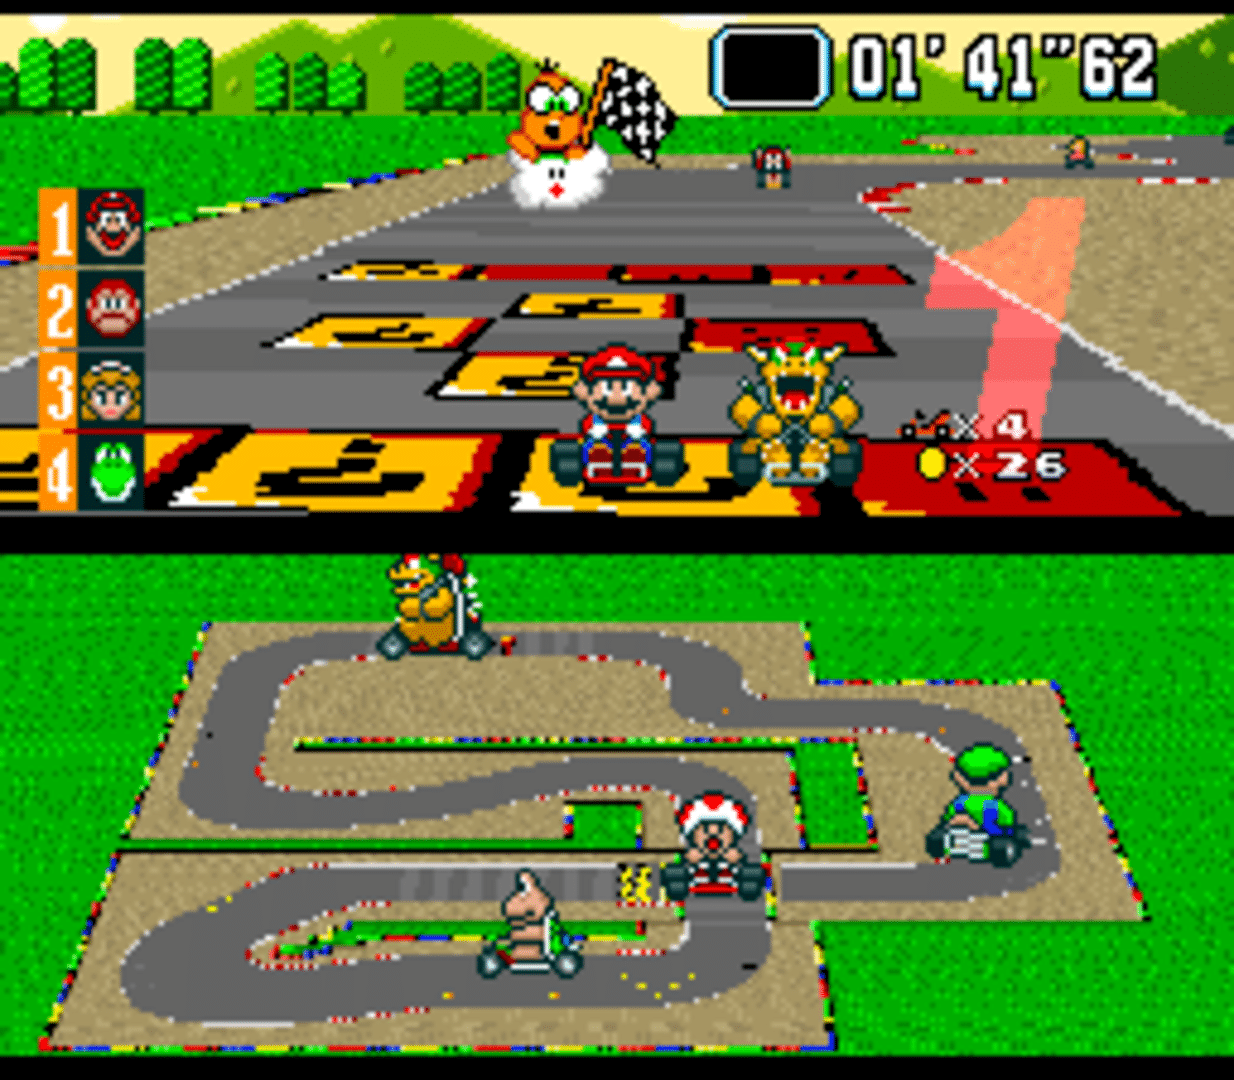 Super Mario Kart Review (SNES)